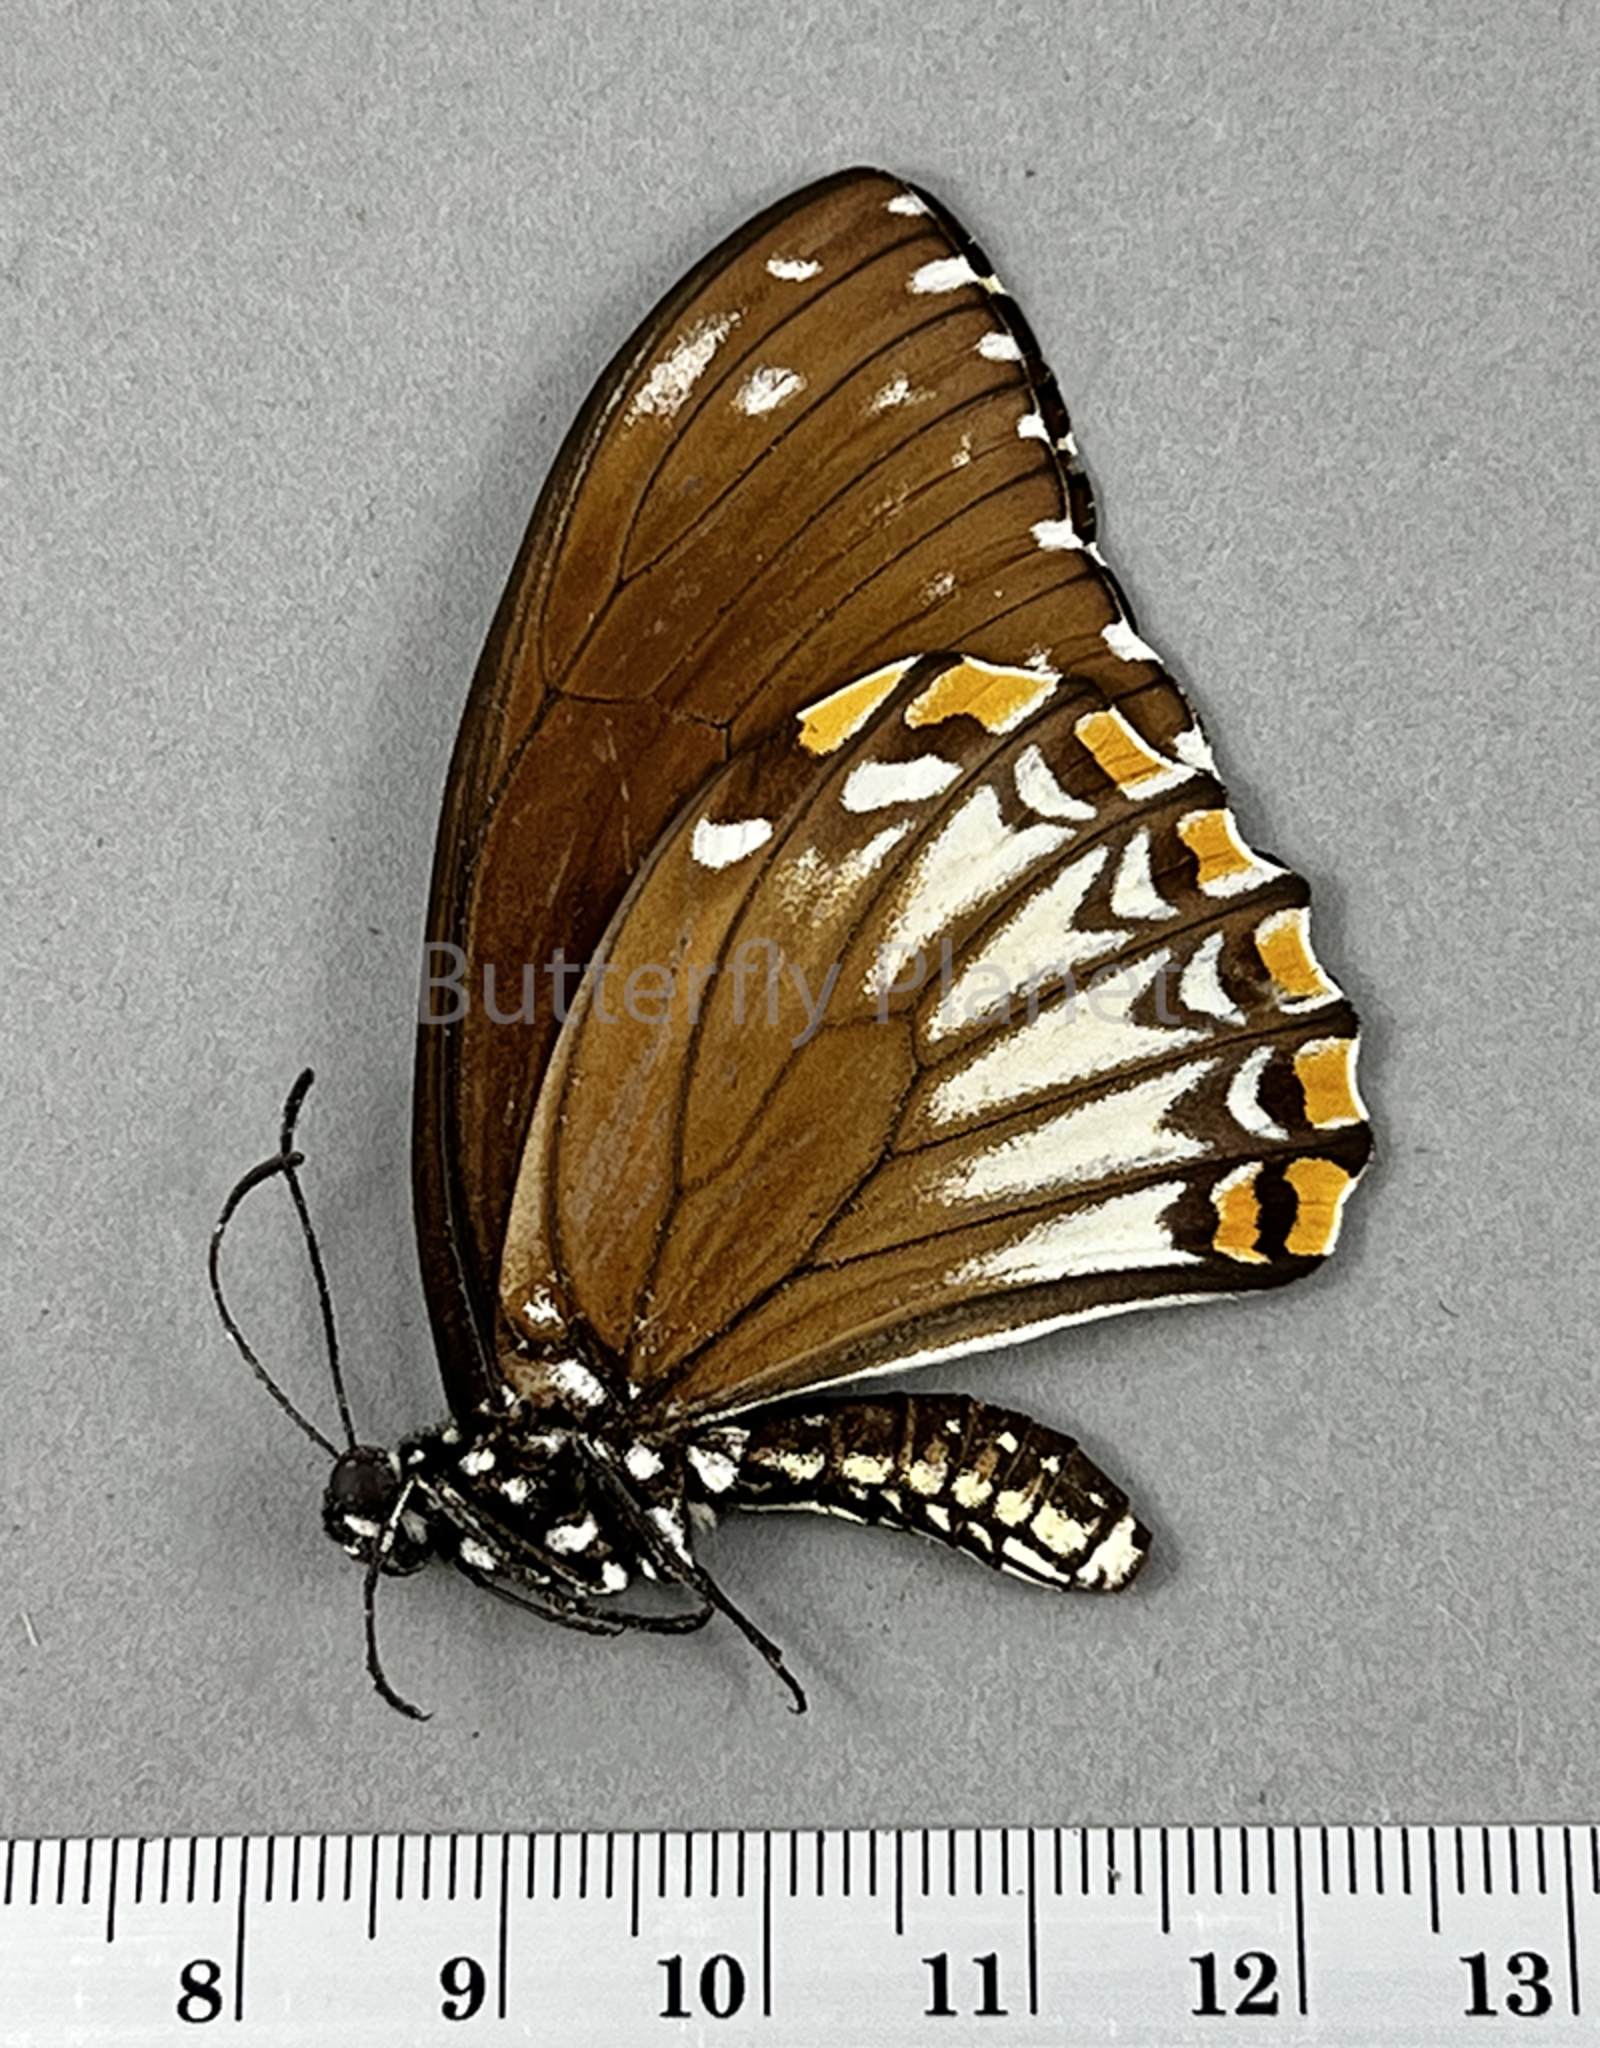 Chilasa clytia lankeswara brown form M A1/A1- Sri Lanka